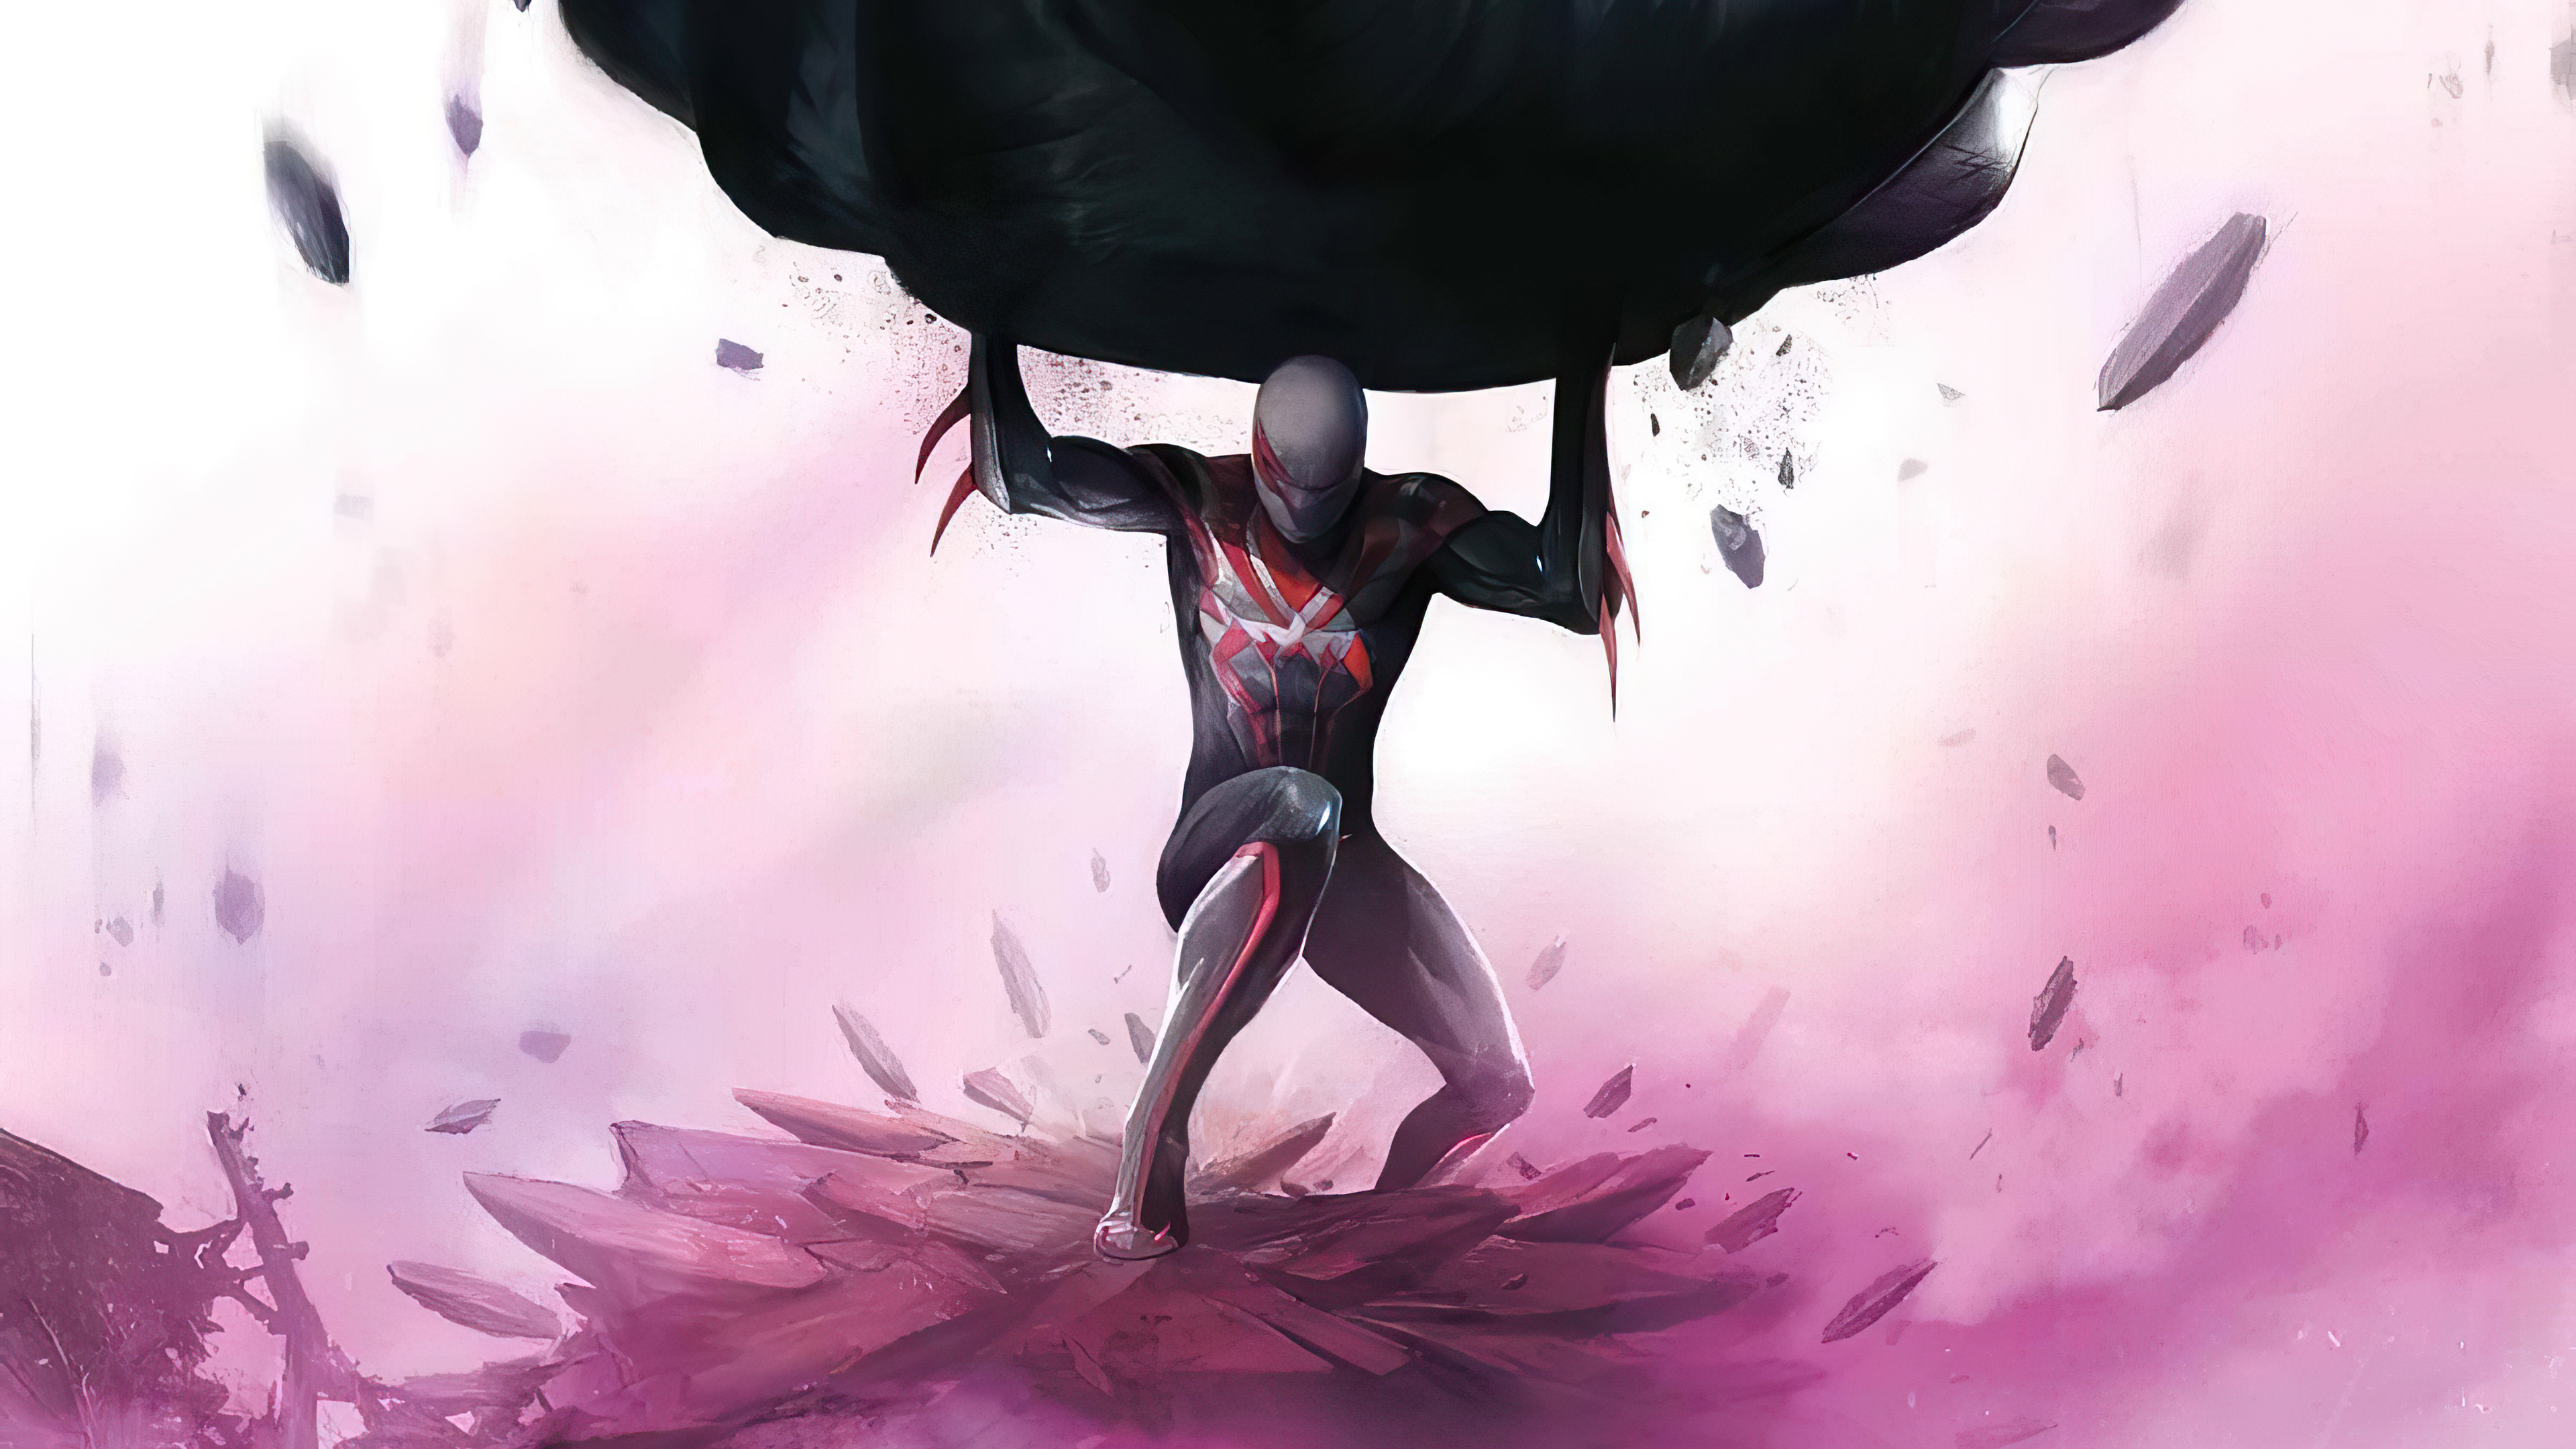 Comics Spider-Man 2099 HD Wallpaper | Background Image